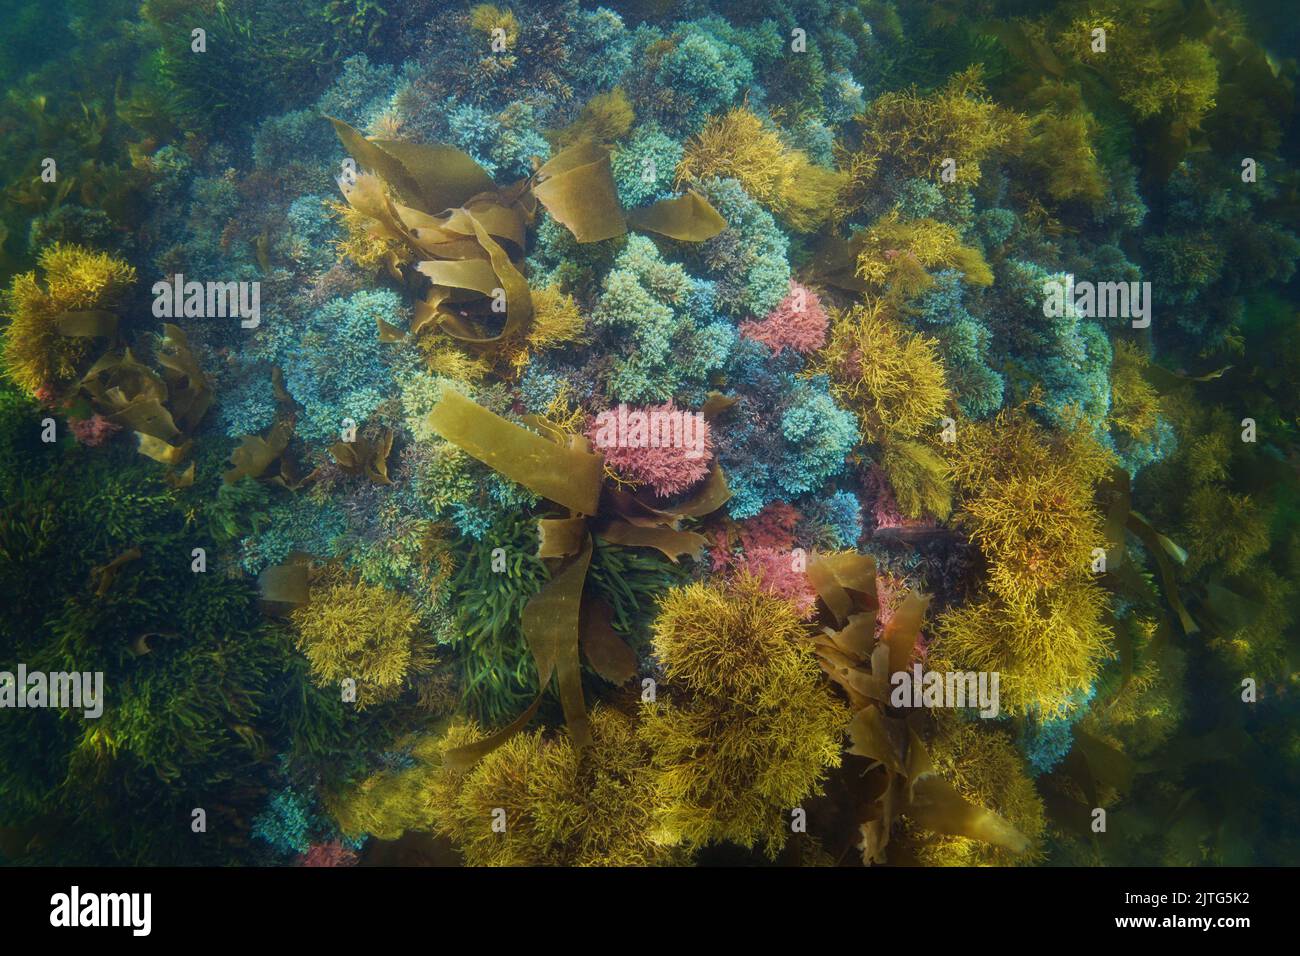 Fondo marino cubierto por diversas algas marinas coloridas vistas desde arriba, escena submarina natural, océano Atlántico, España, Galicia Foto de stock